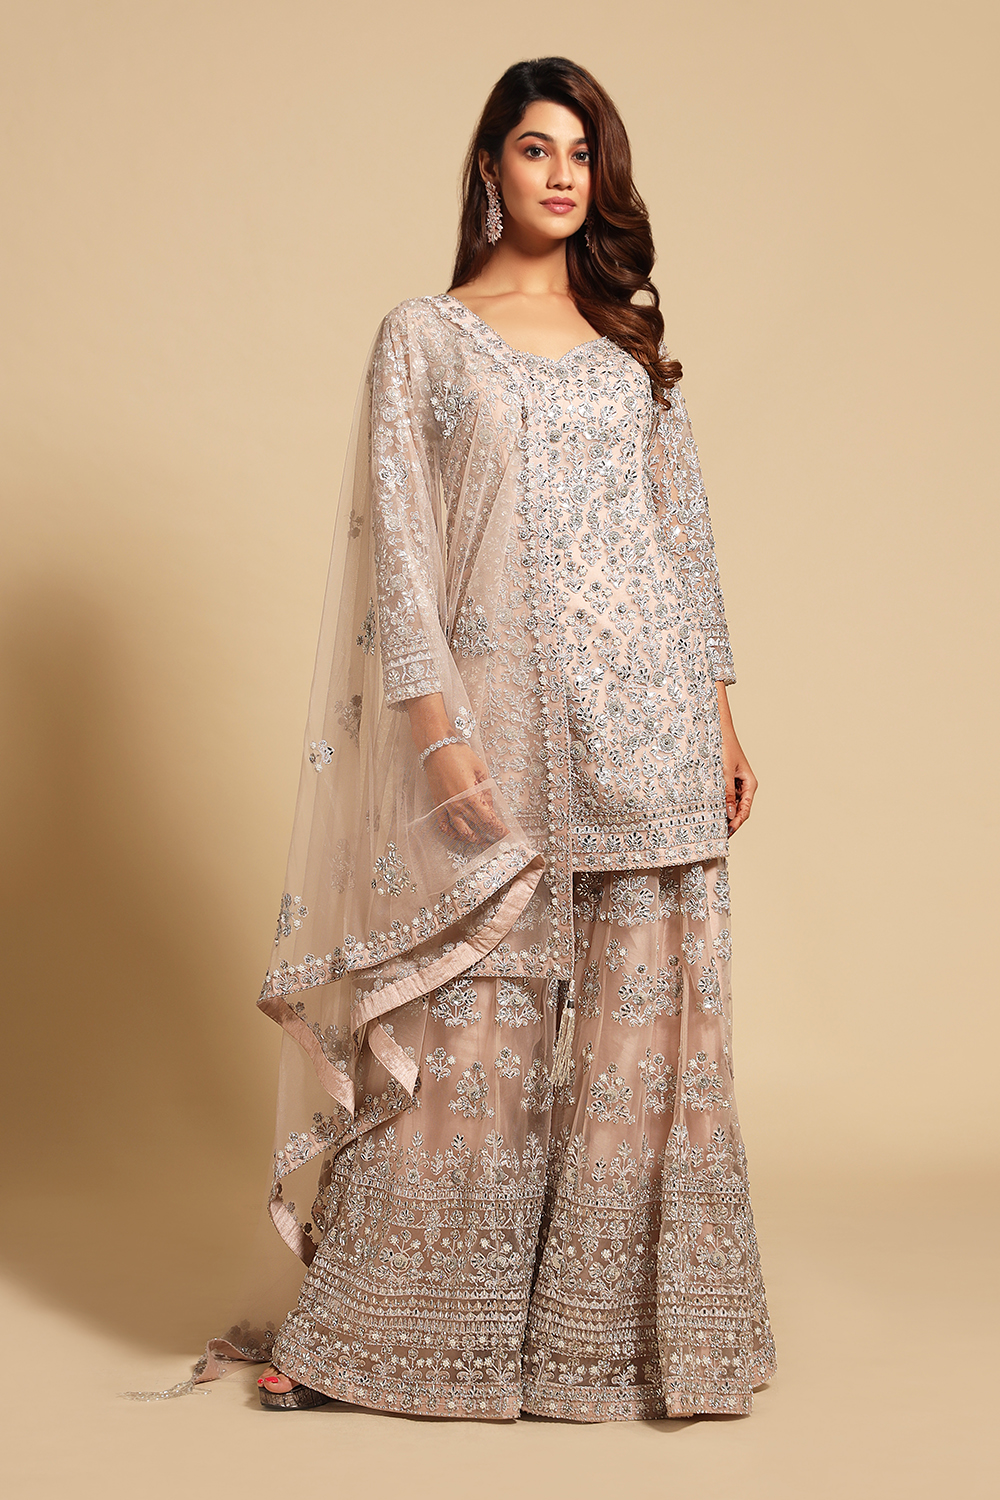 Indian Dresses With Palazzo Pants | Maharani Designer Boutique